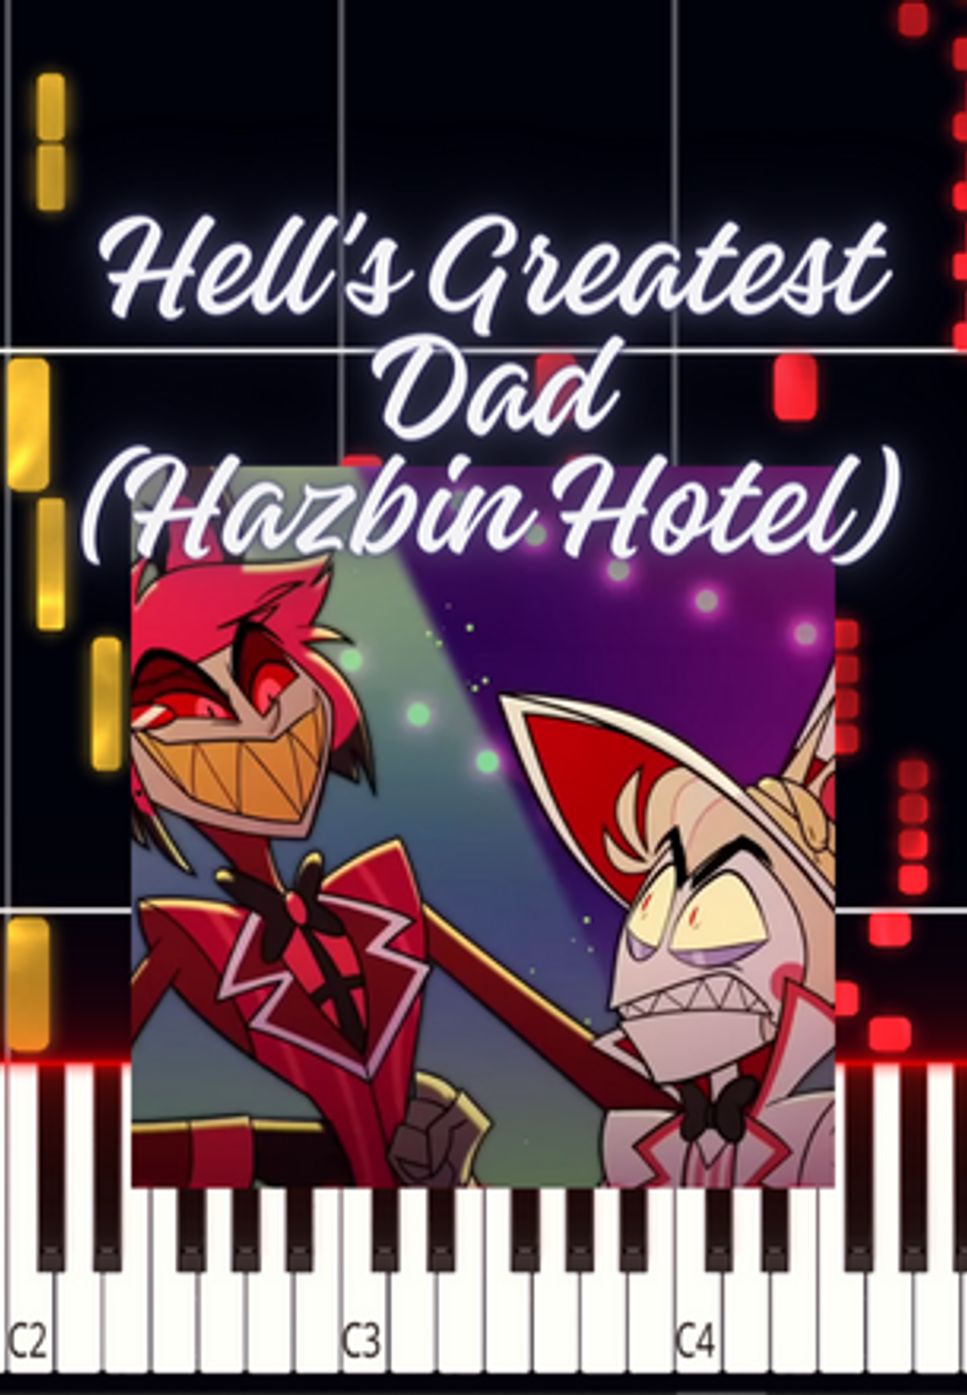 Sam Haft - Hell's Greatest Dad (Hazbin Hotel) by Marco D.